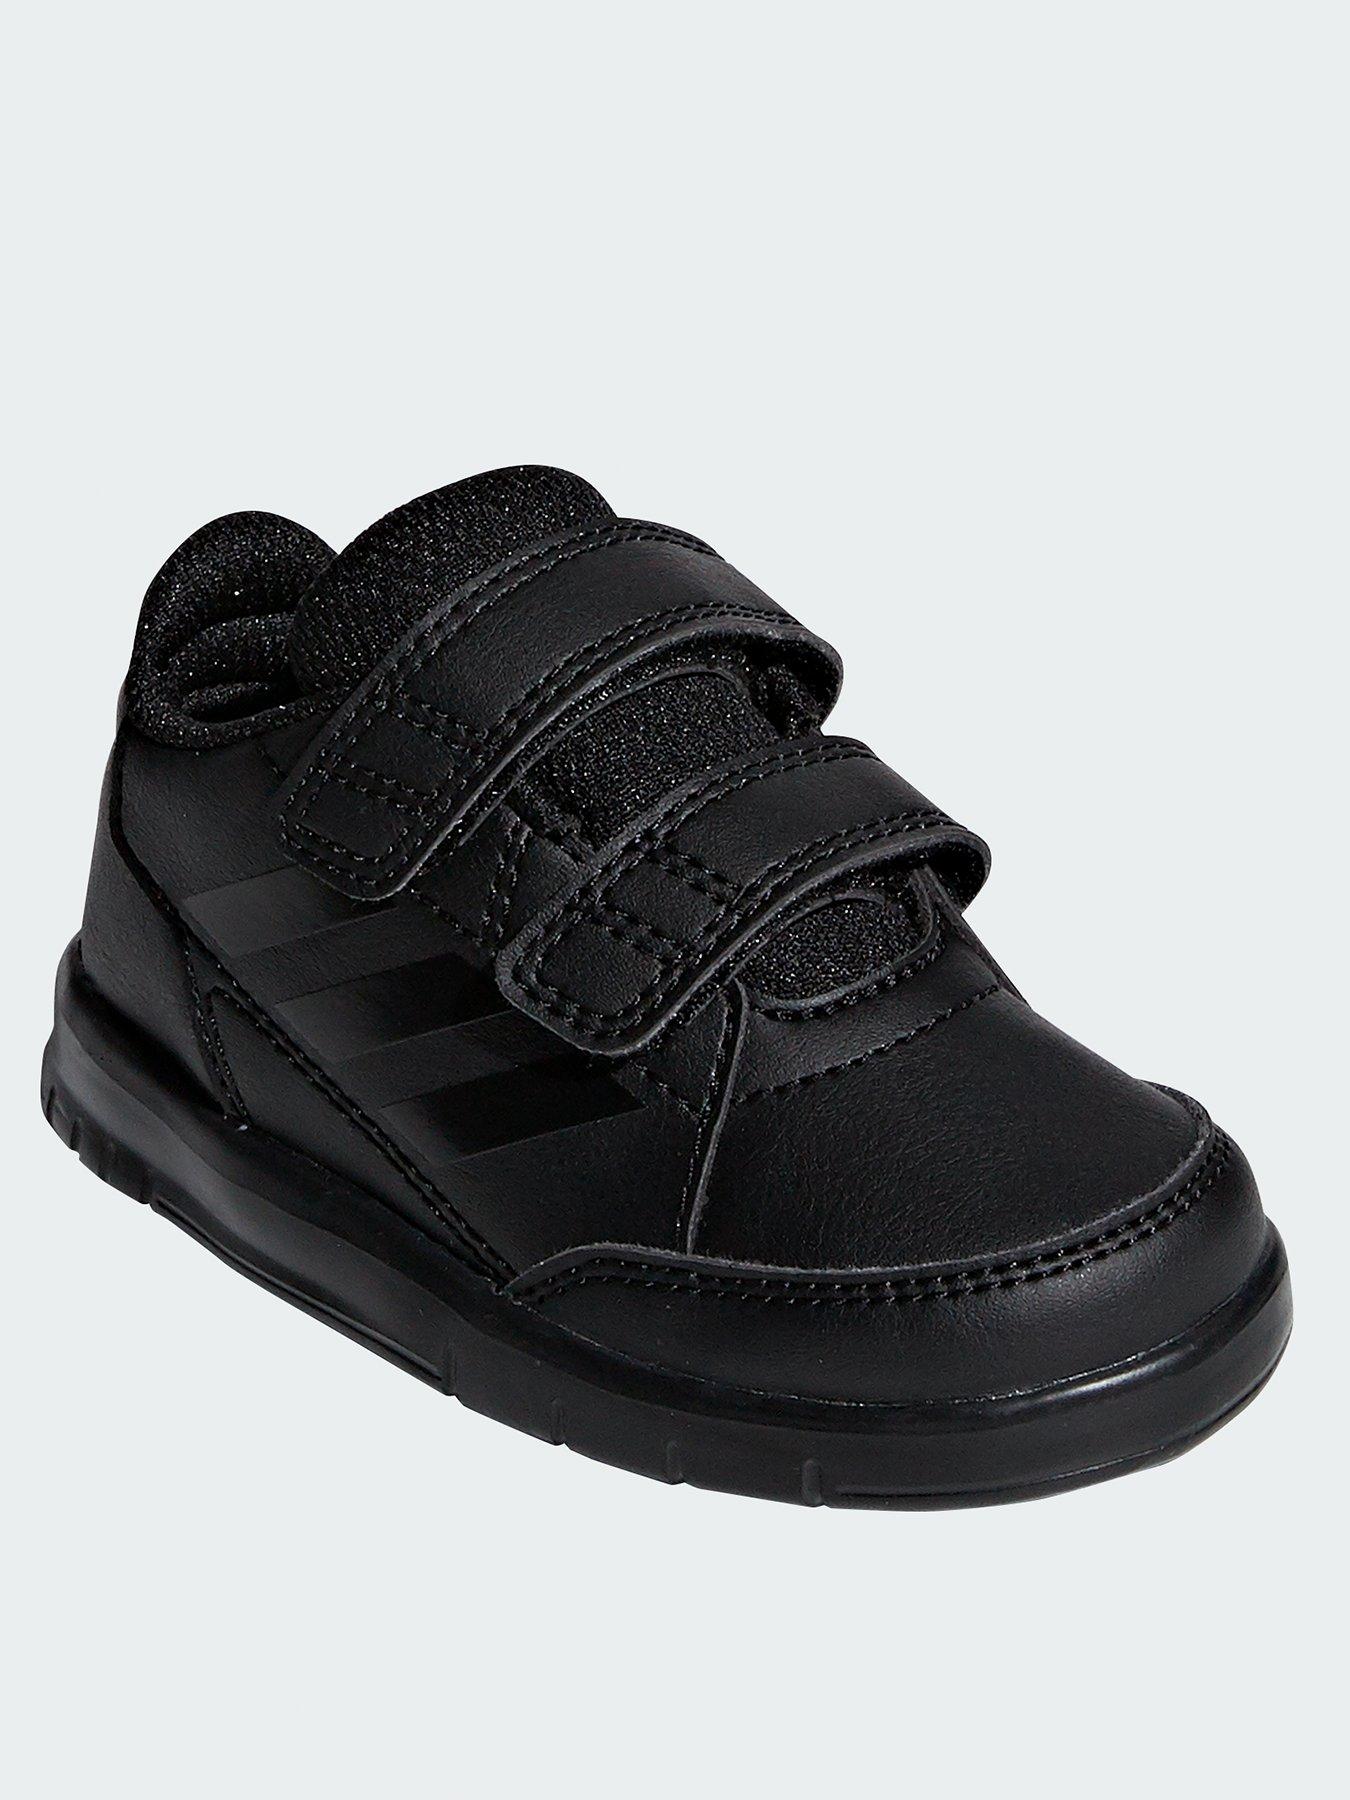 adidas black school trainers